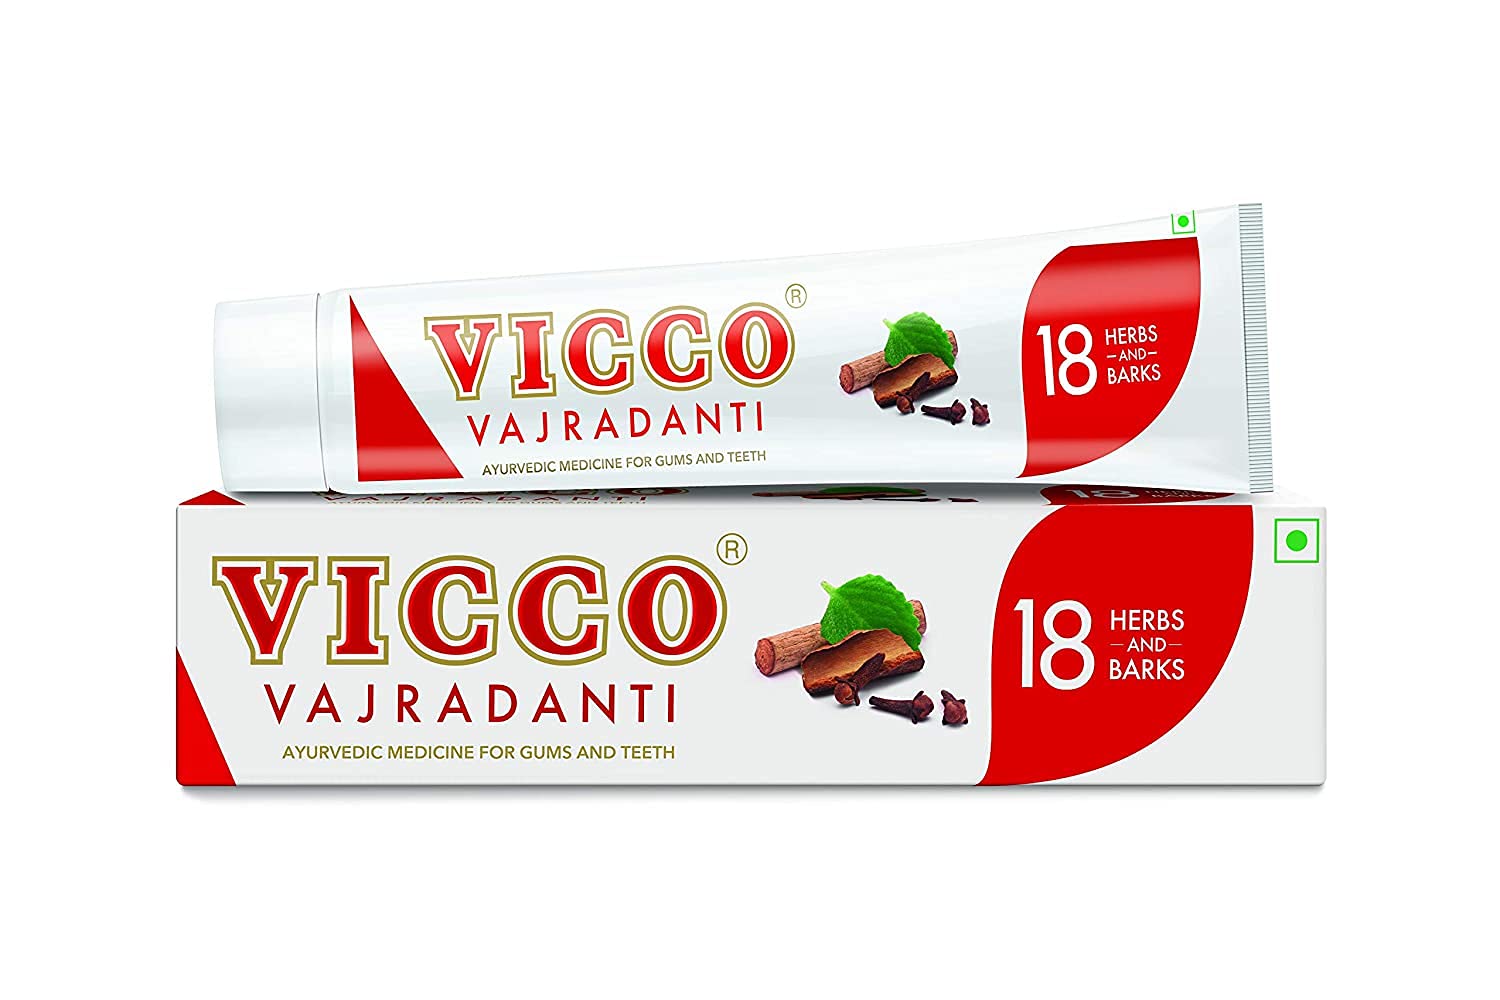 Vicco vajradanti ayurvedic medicine for gums and teeth